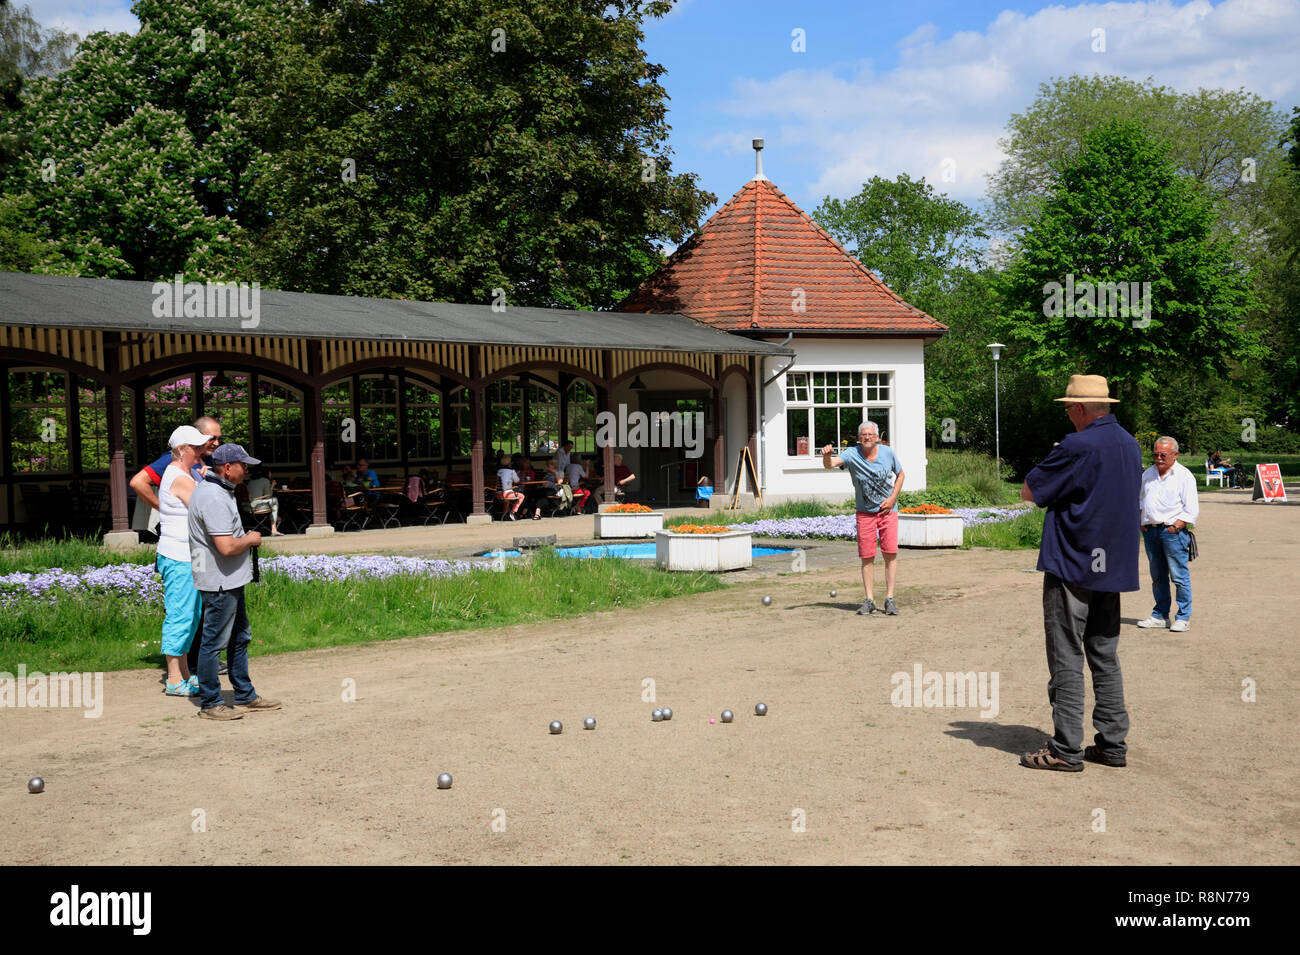 Boule players in front of (Wandelhalle im Kurpark), Spa gardens, Lueneburg, Lüneburg, Lower Saxony, Germany, Europe Stock Photo